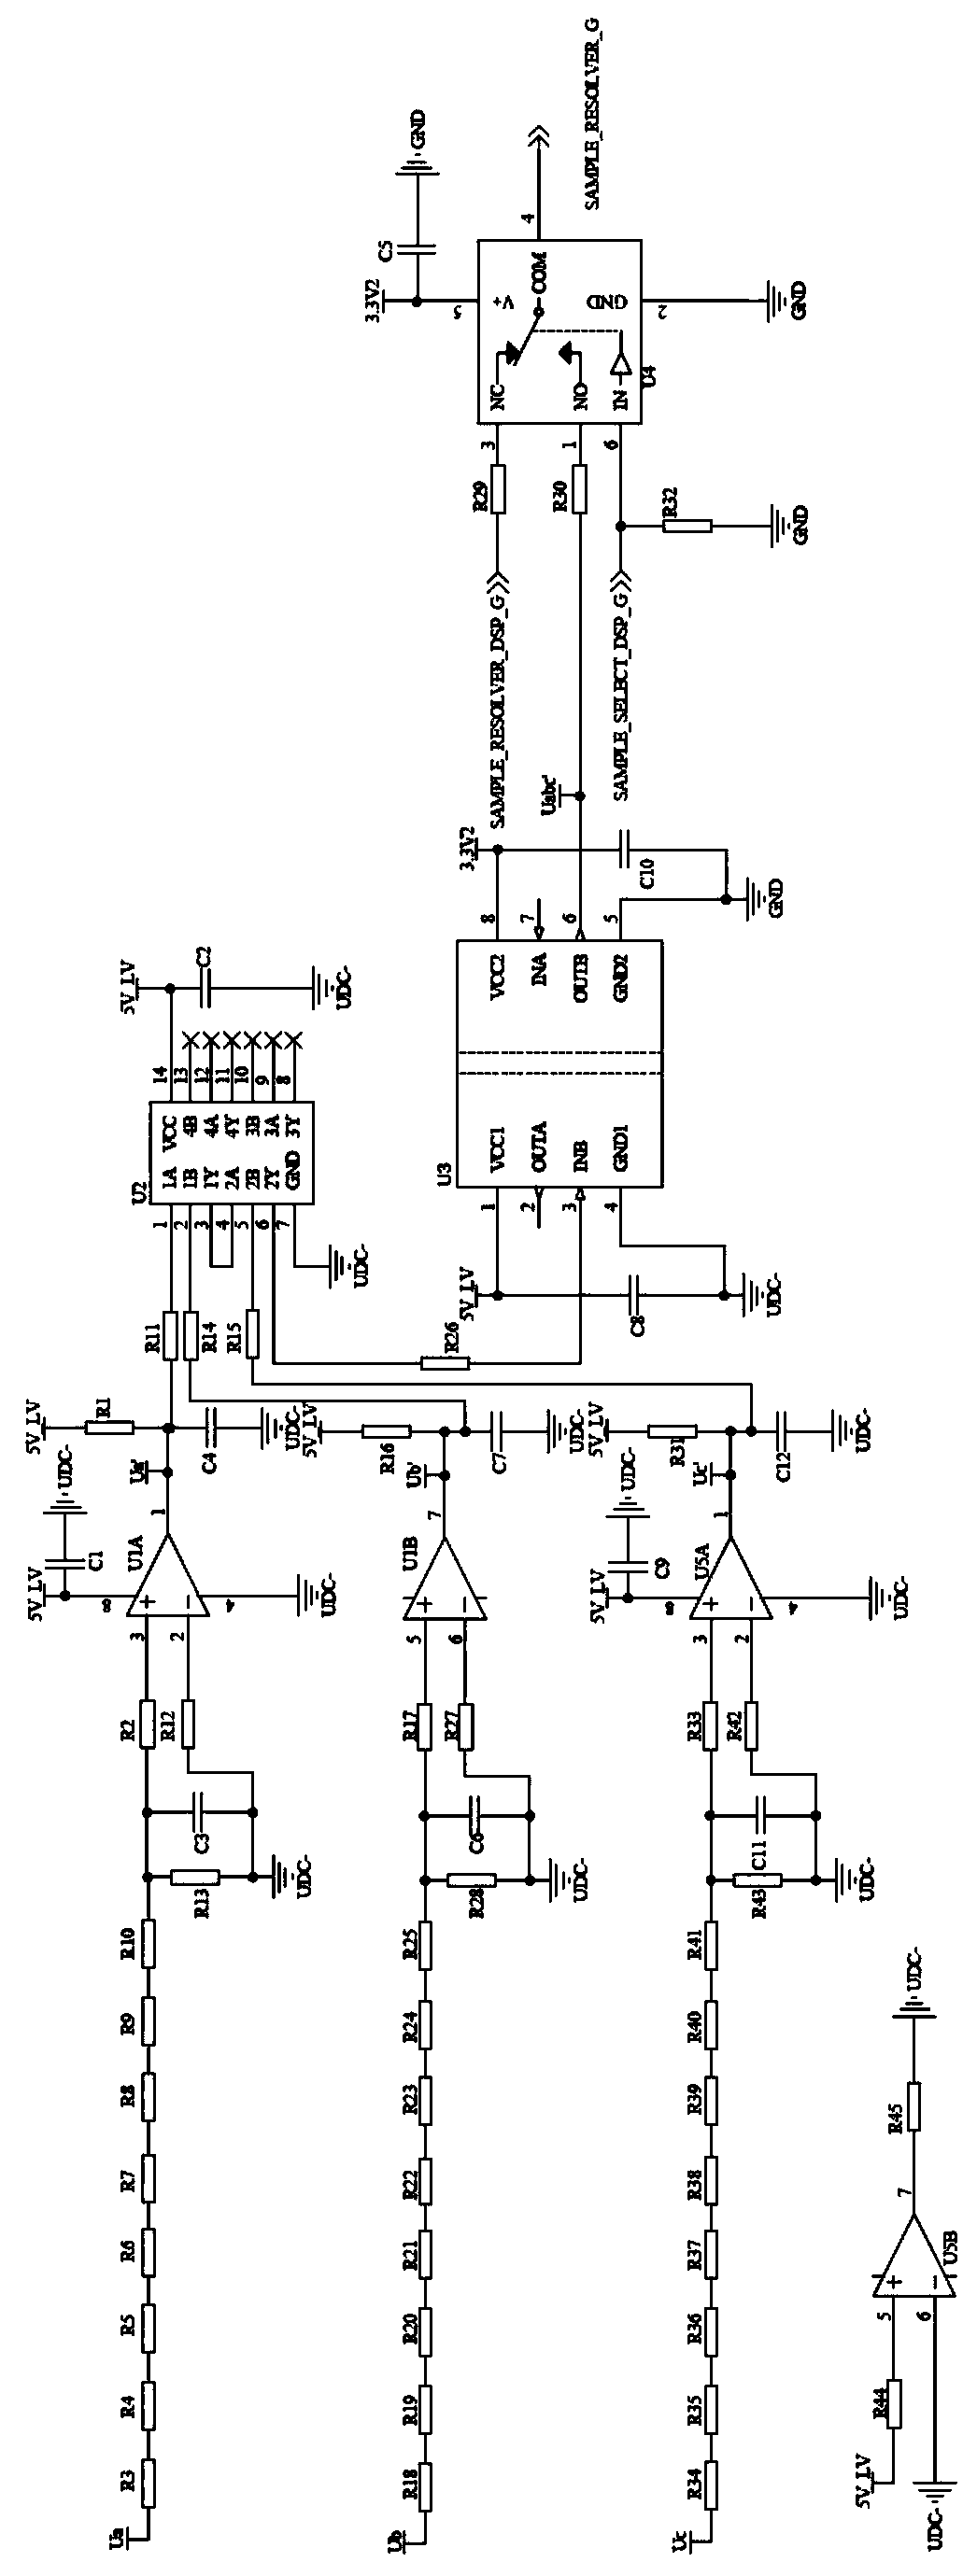 Permanent magnet synchronous motor resolver zero position calibration circuit